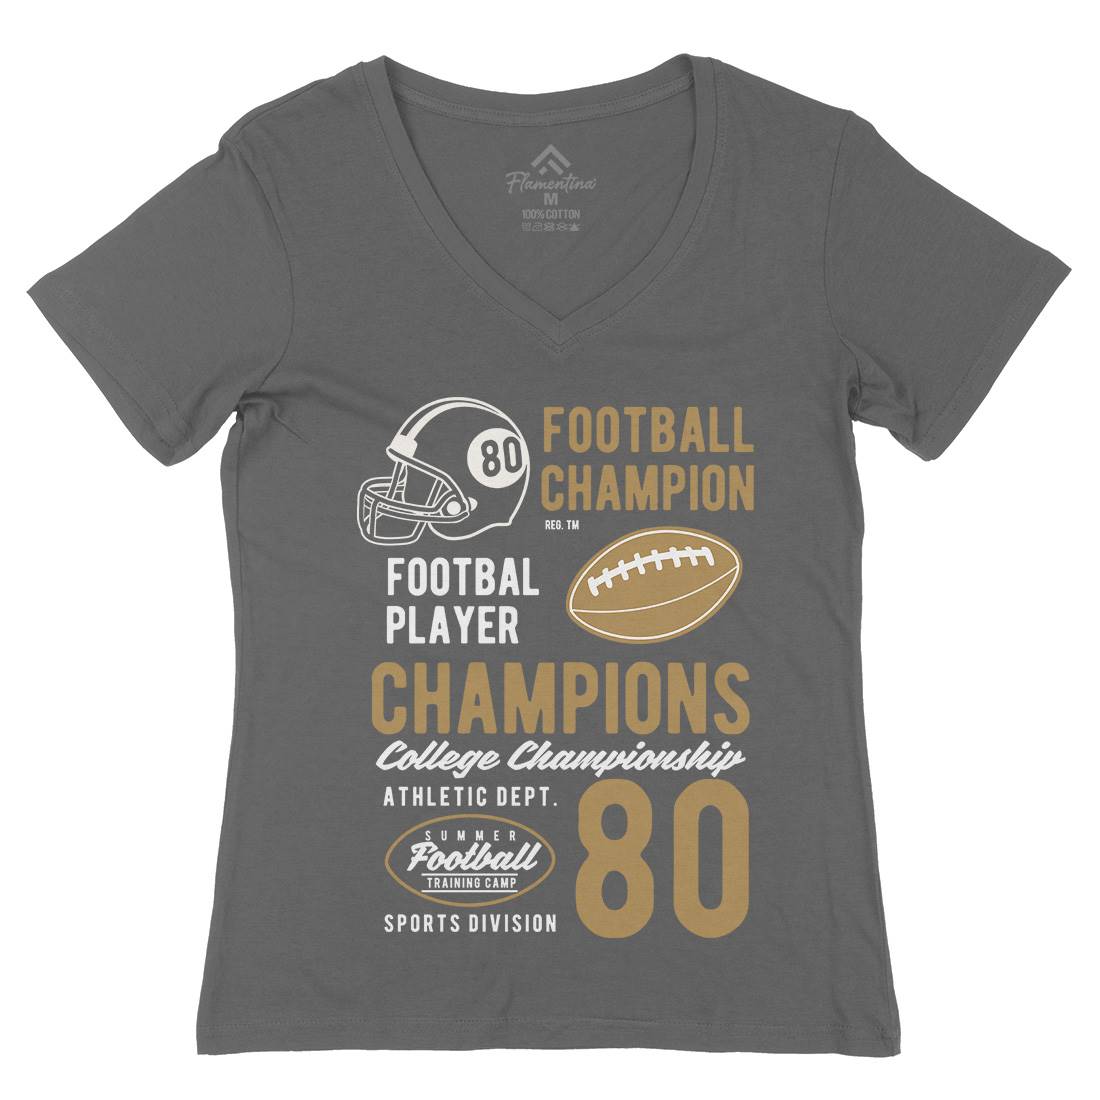 Football Champions Womens Organic V-Neck T-Shirt Sport B405